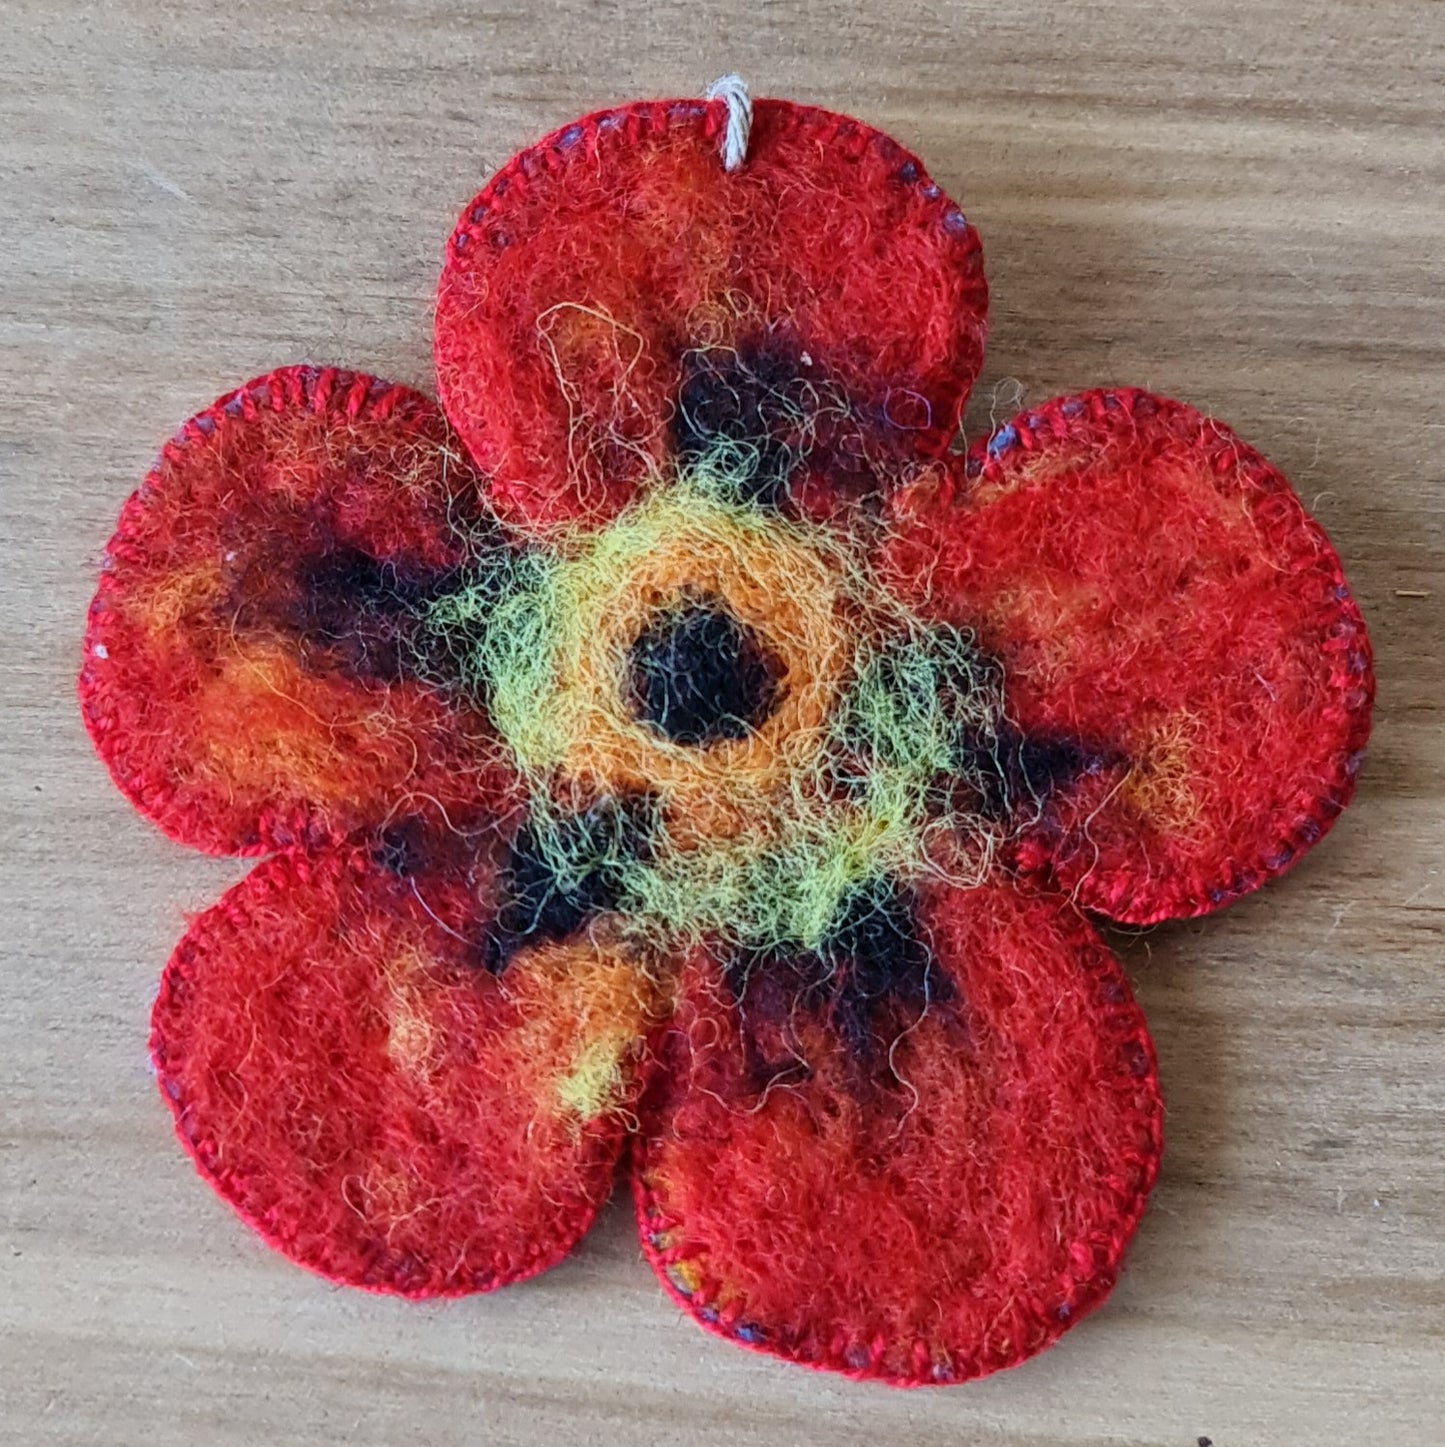 Felt flower (without pin) in reddish tones with brown/yellow/orange center / diameter 9 cm (AMA)